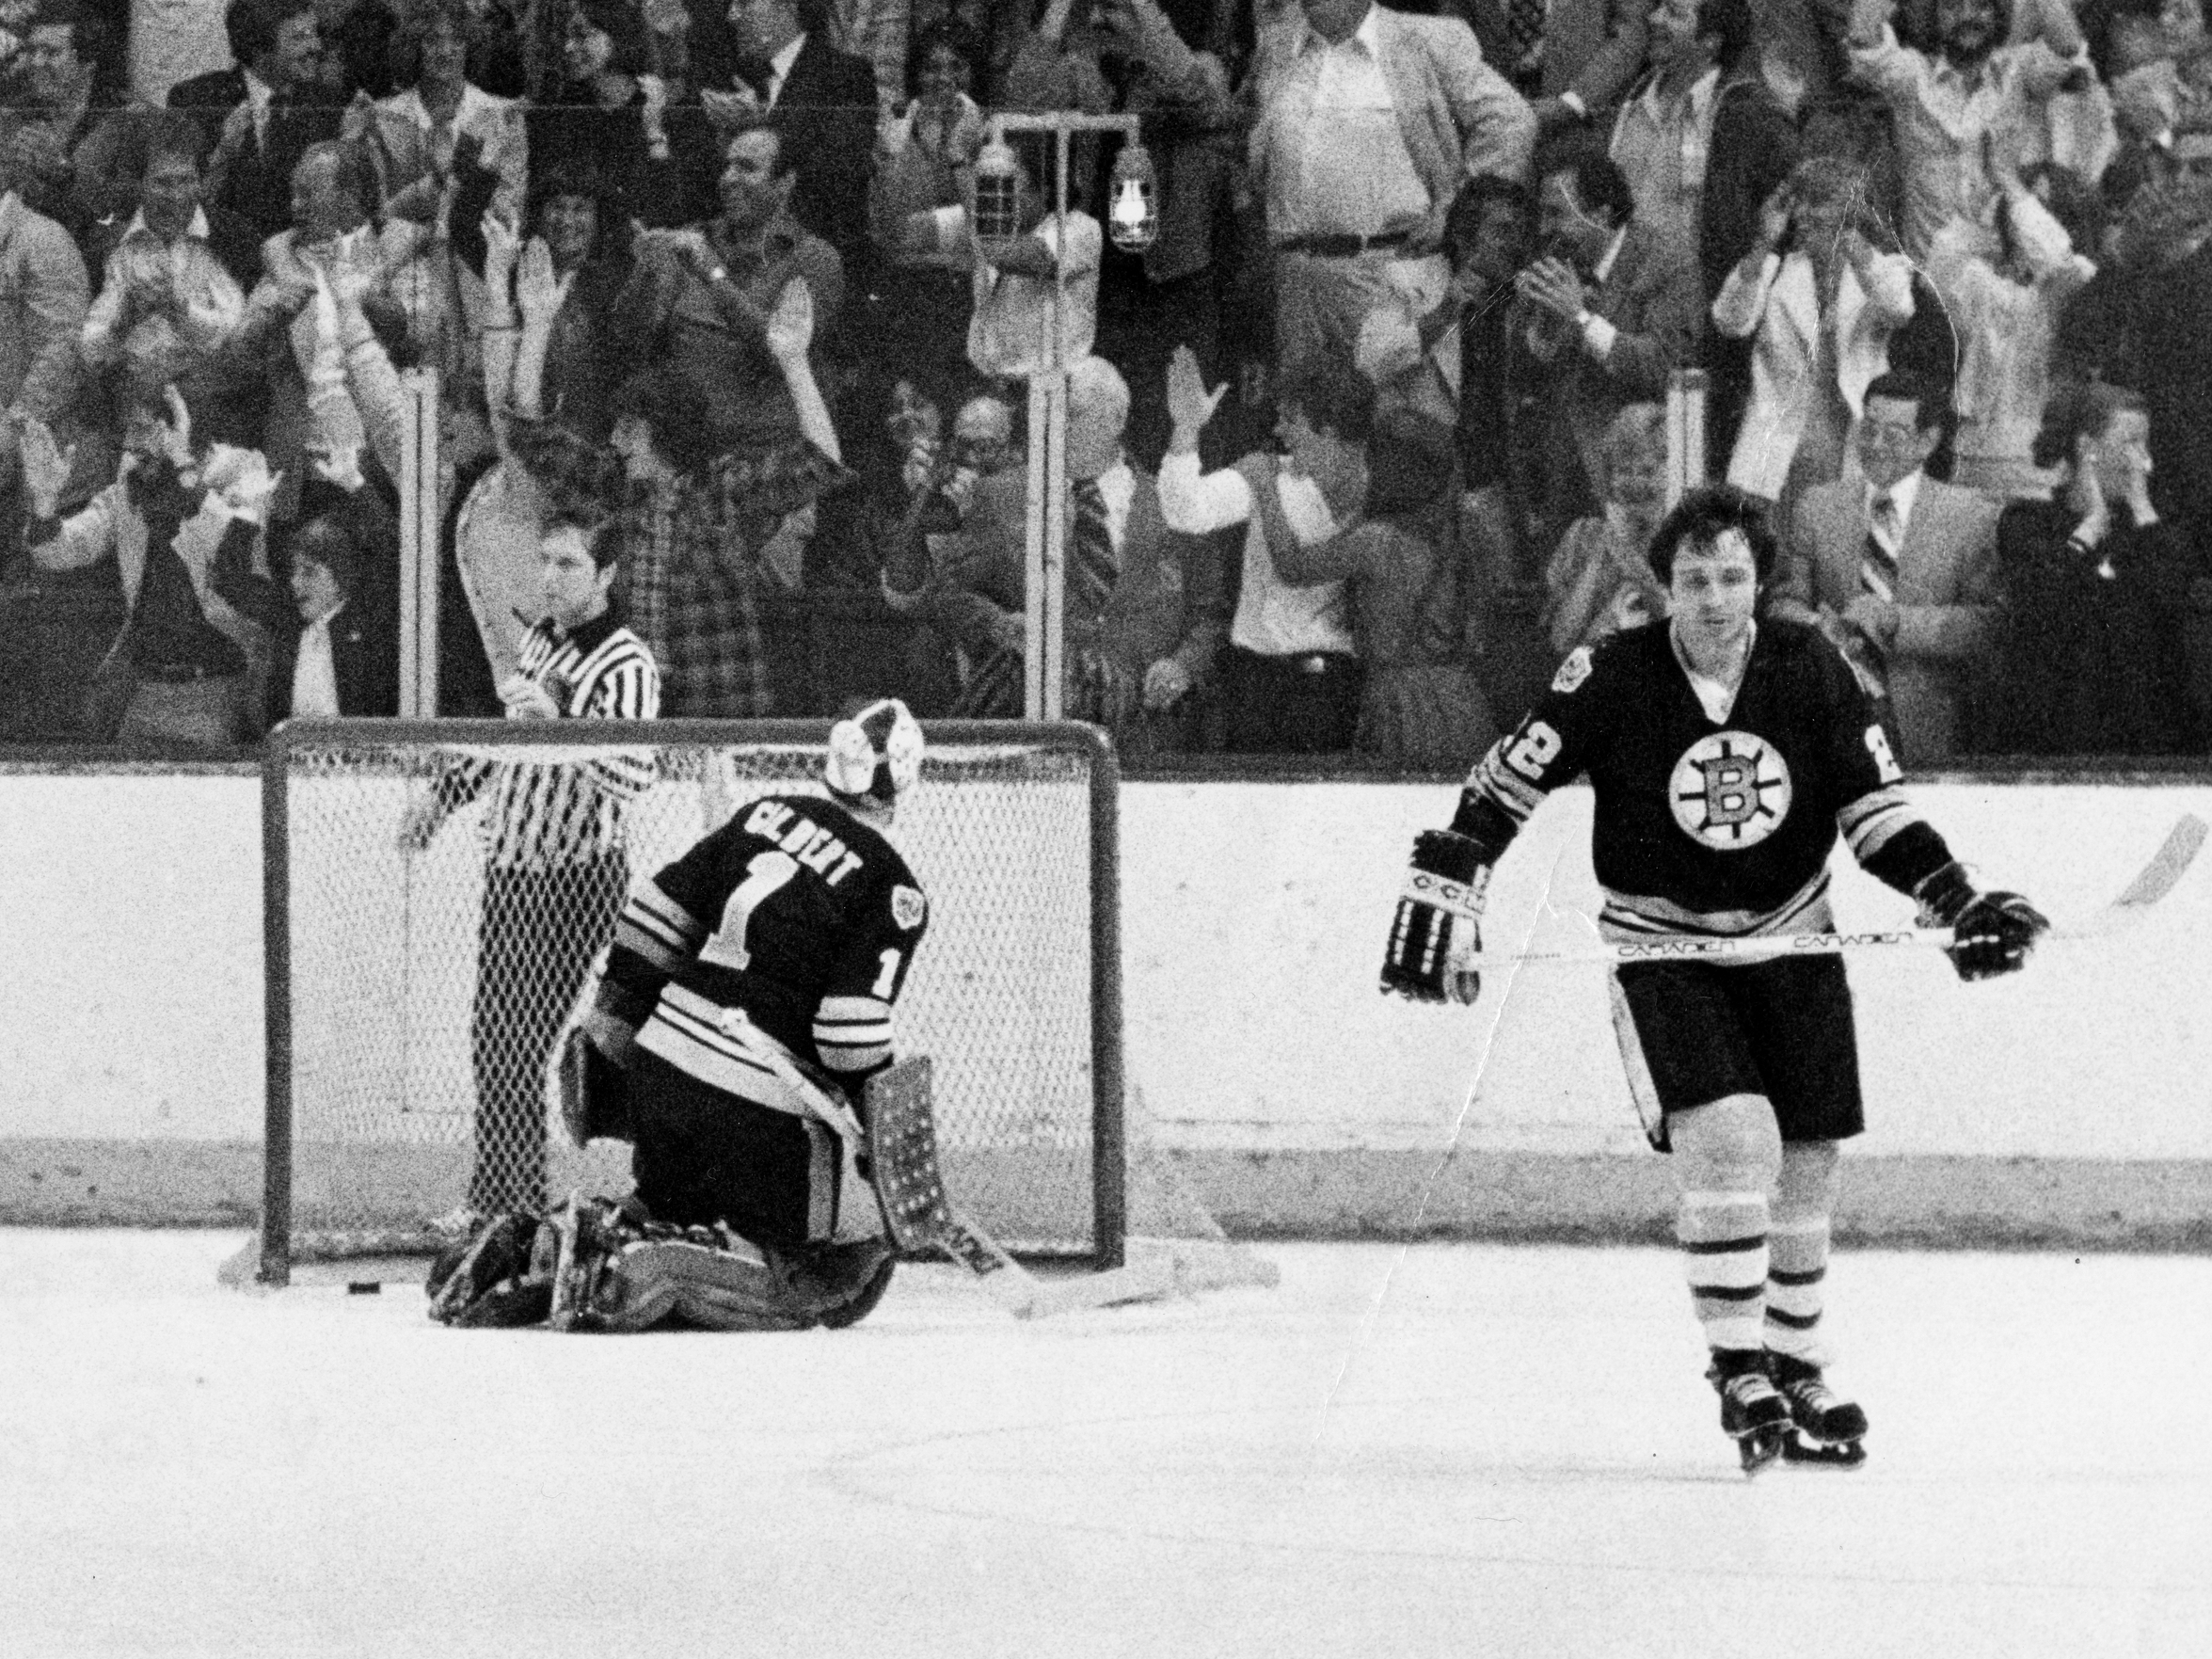 Wayne Gretzky's 1980-81 Oilers Road Gamer Could Hit Six Figures